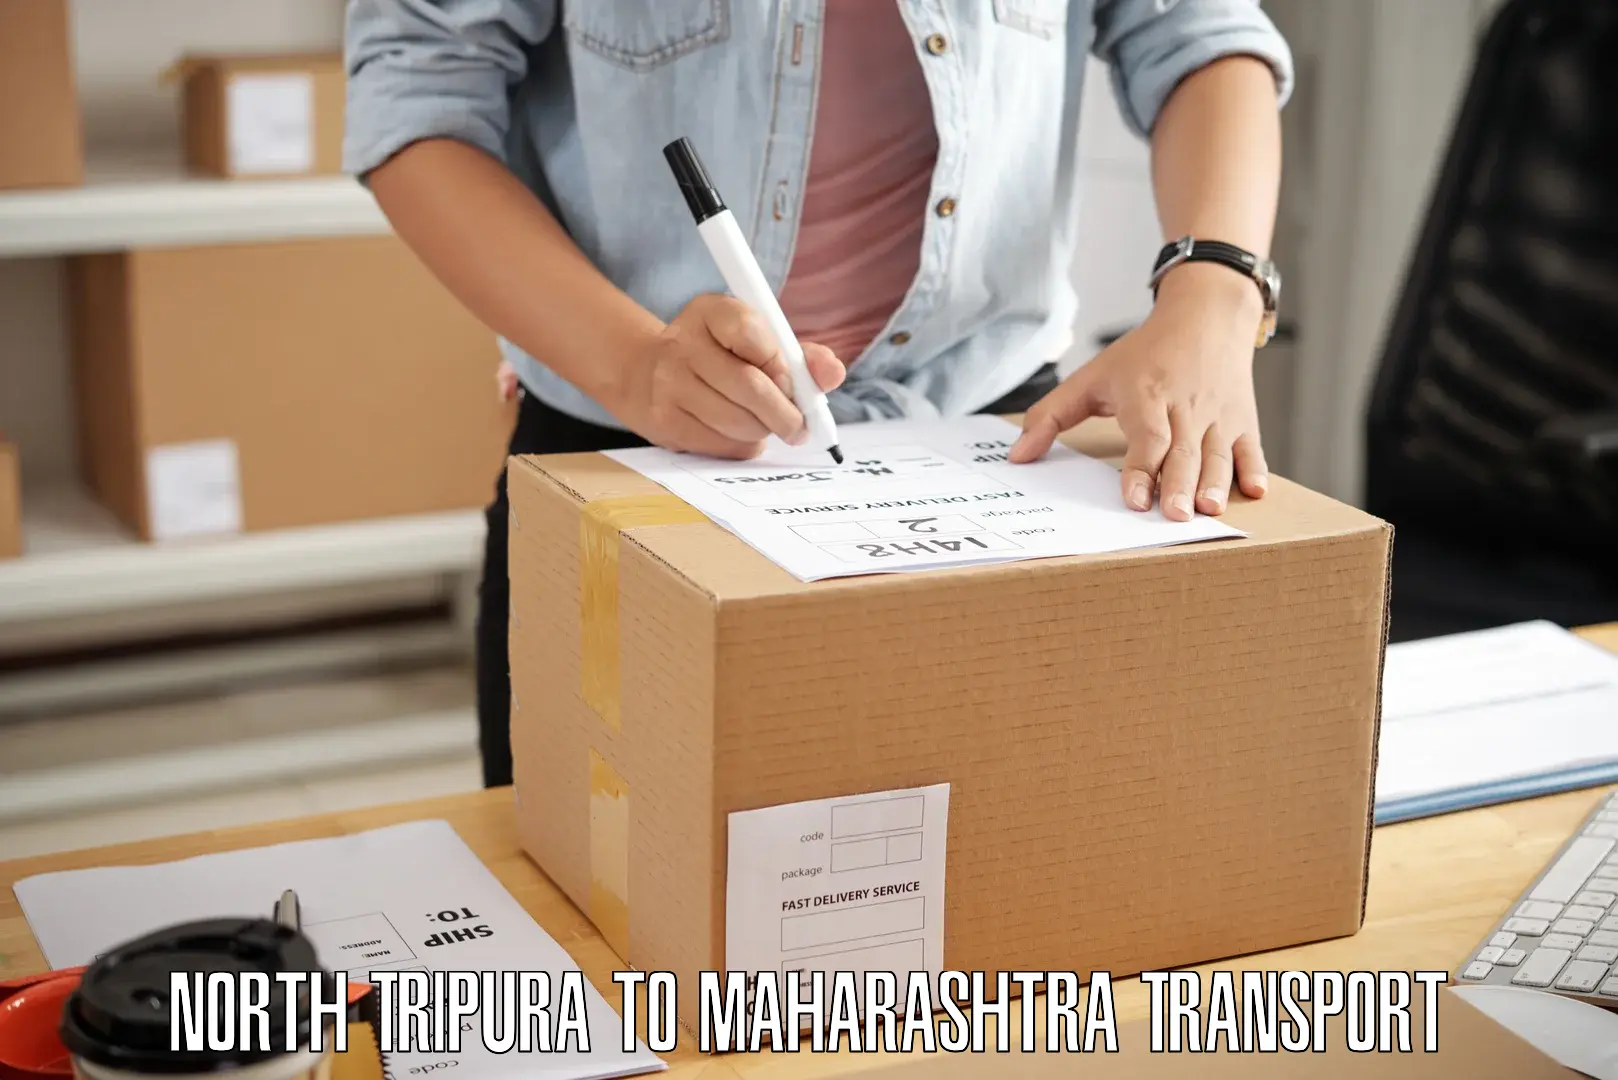 Nearest transport service North Tripura to Raigarh Maharashtra